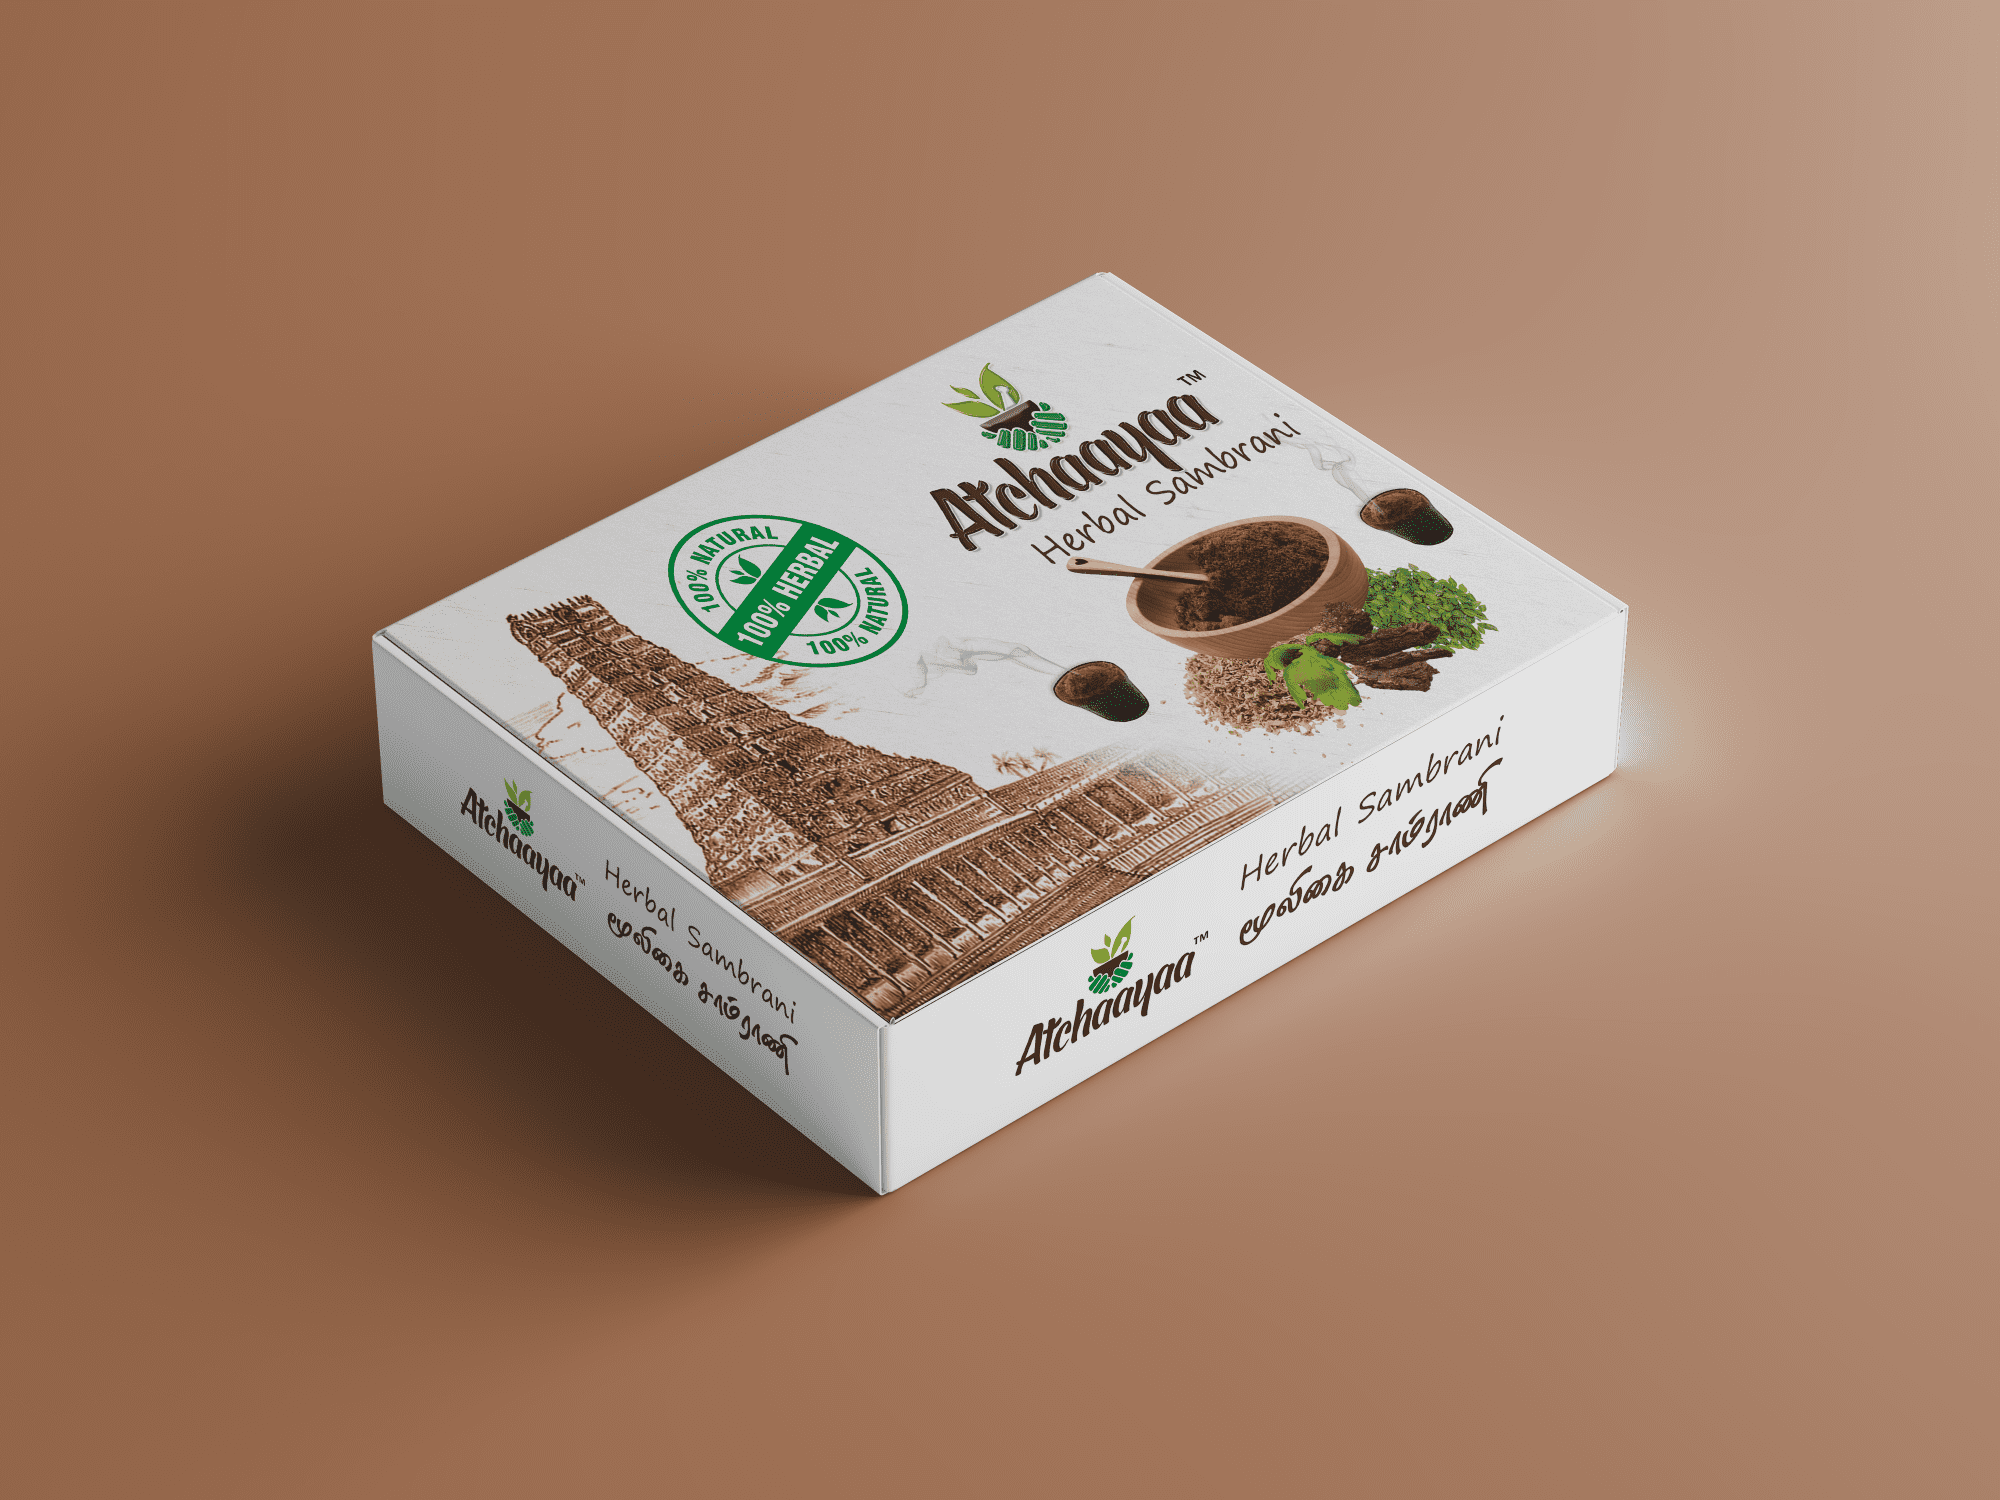 Atchaayaa Herbal Brand Sambrani Packaging Box Design by Violet Spark